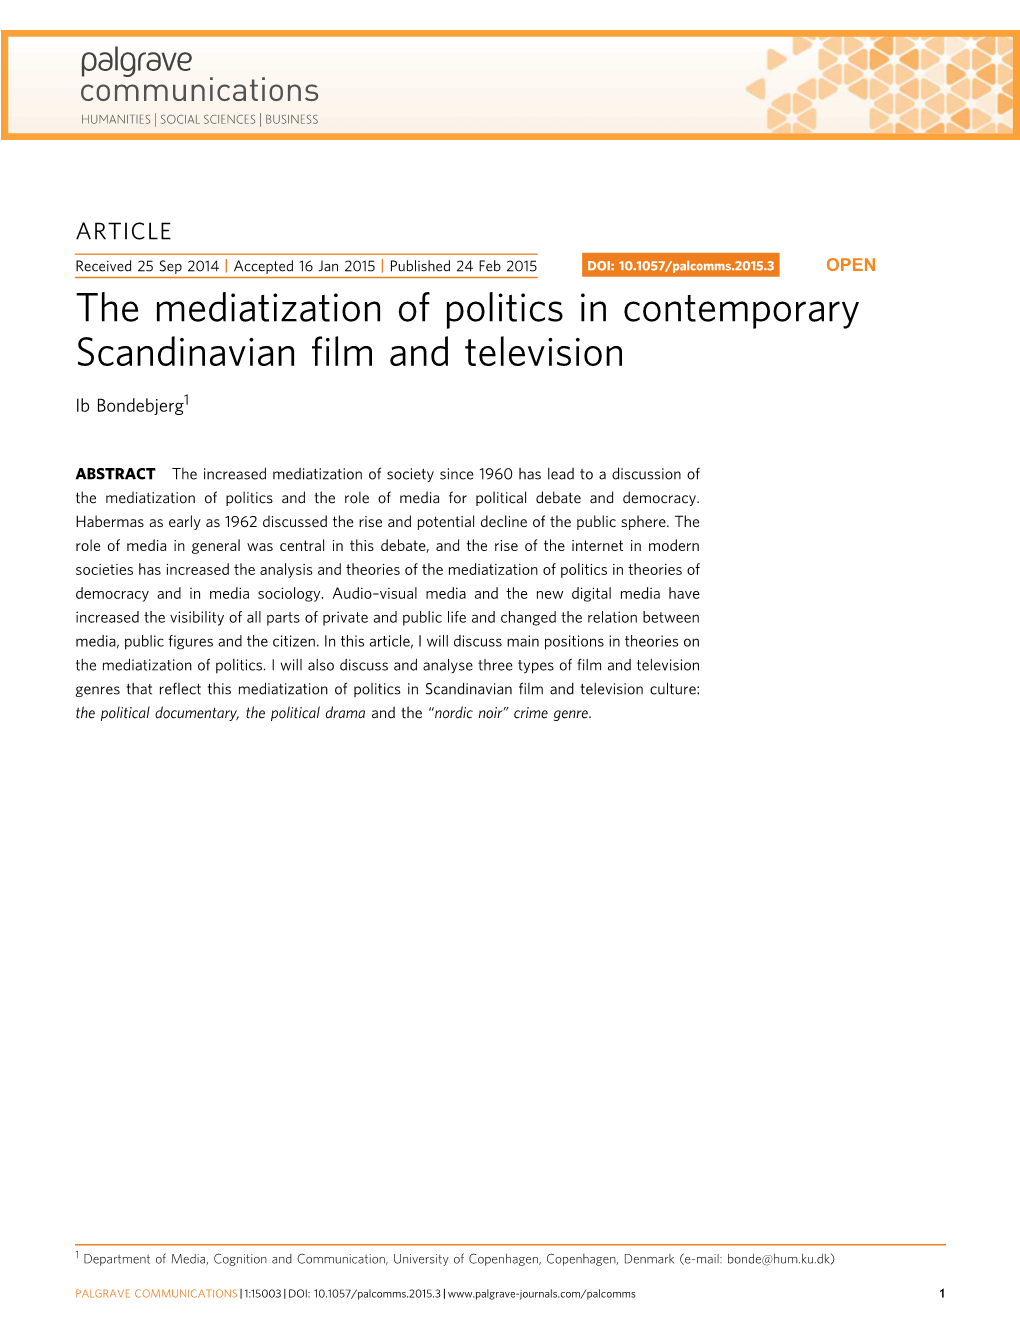 The Mediatization of Politics in Contemporary Scandinavian Film